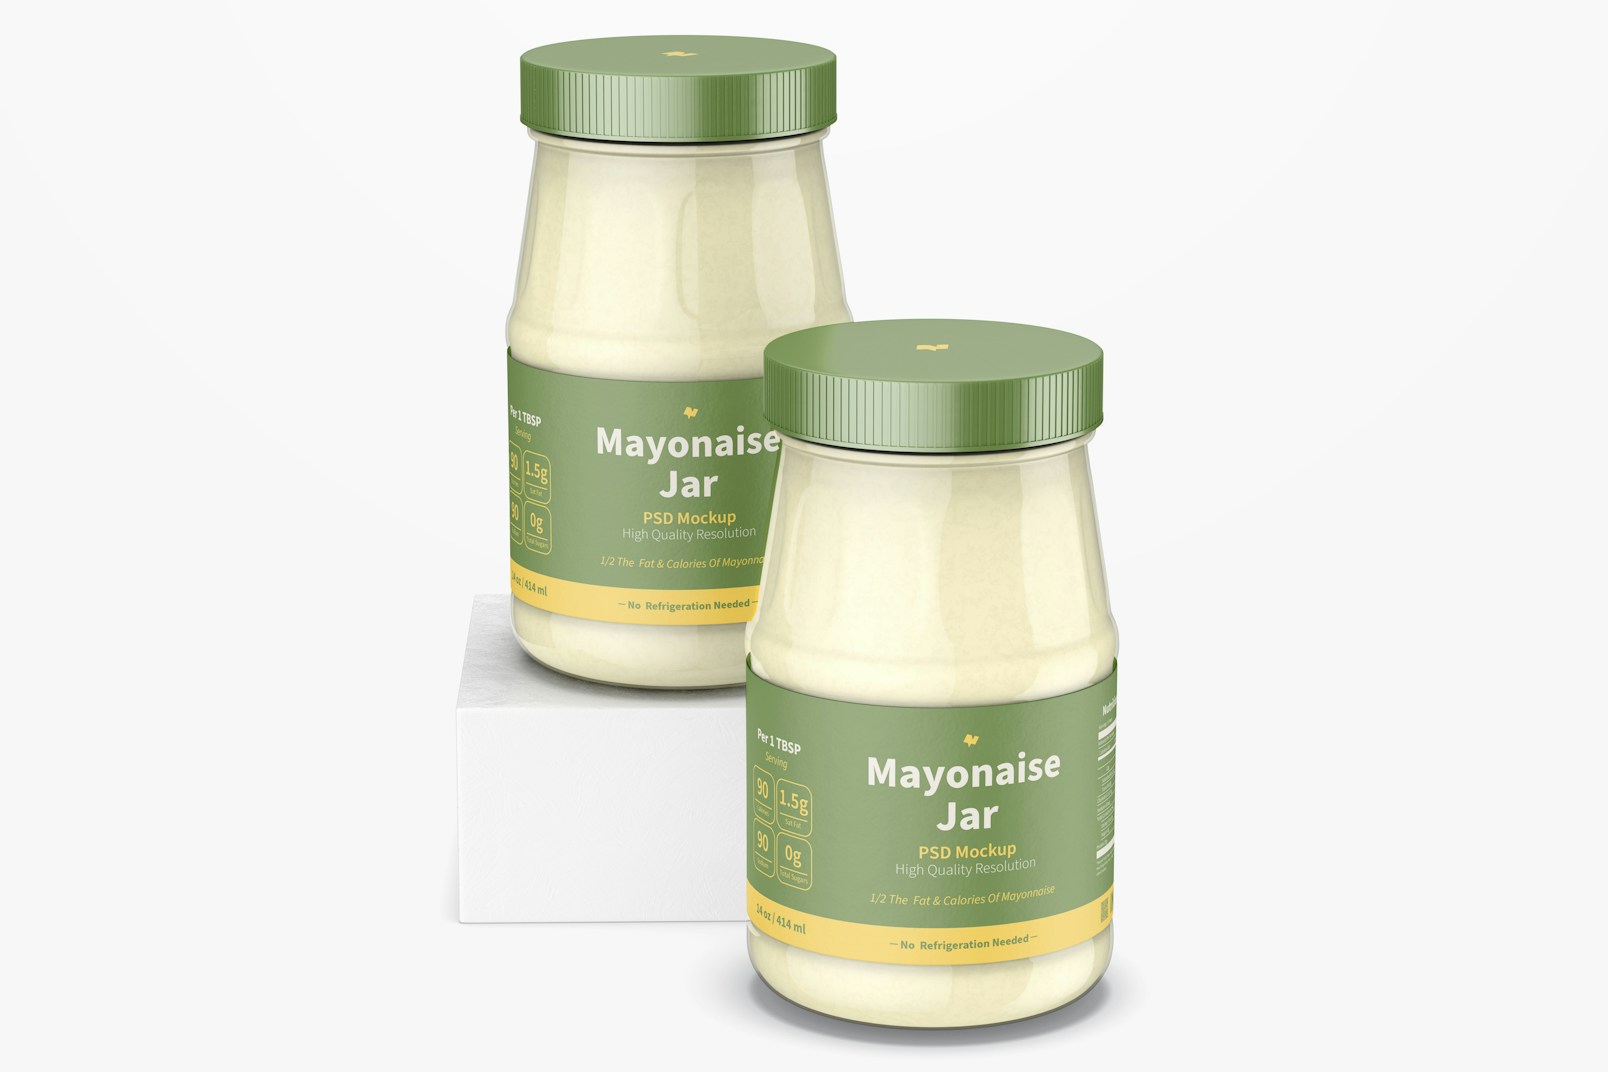 14 oz Mayonnaise Jars Mockup